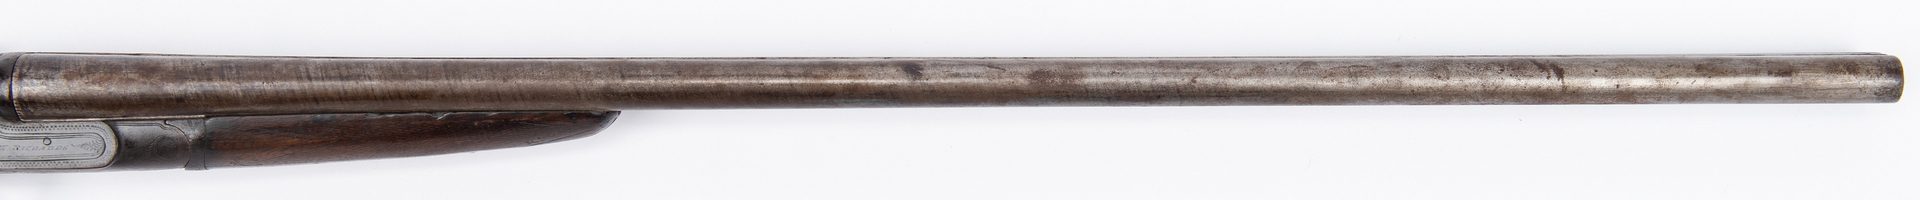 Lot 183: W. Richards Company, London Double Barrel Shotgun, 16 gauge